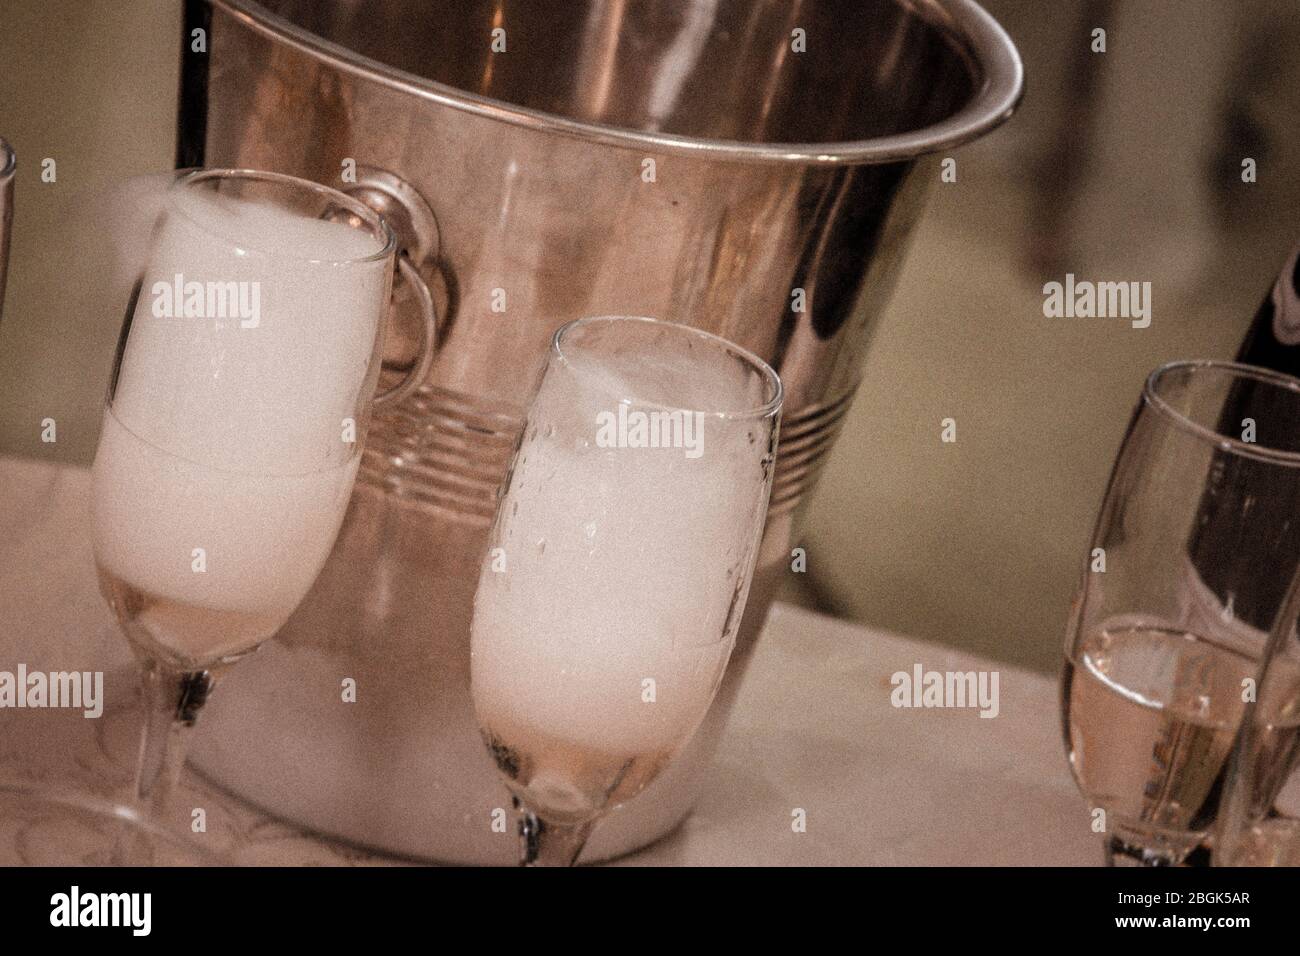 Due bicchieri di champagne pieni di bevande e schiuma in tonalità seppia inclinata a destra Foto Stock